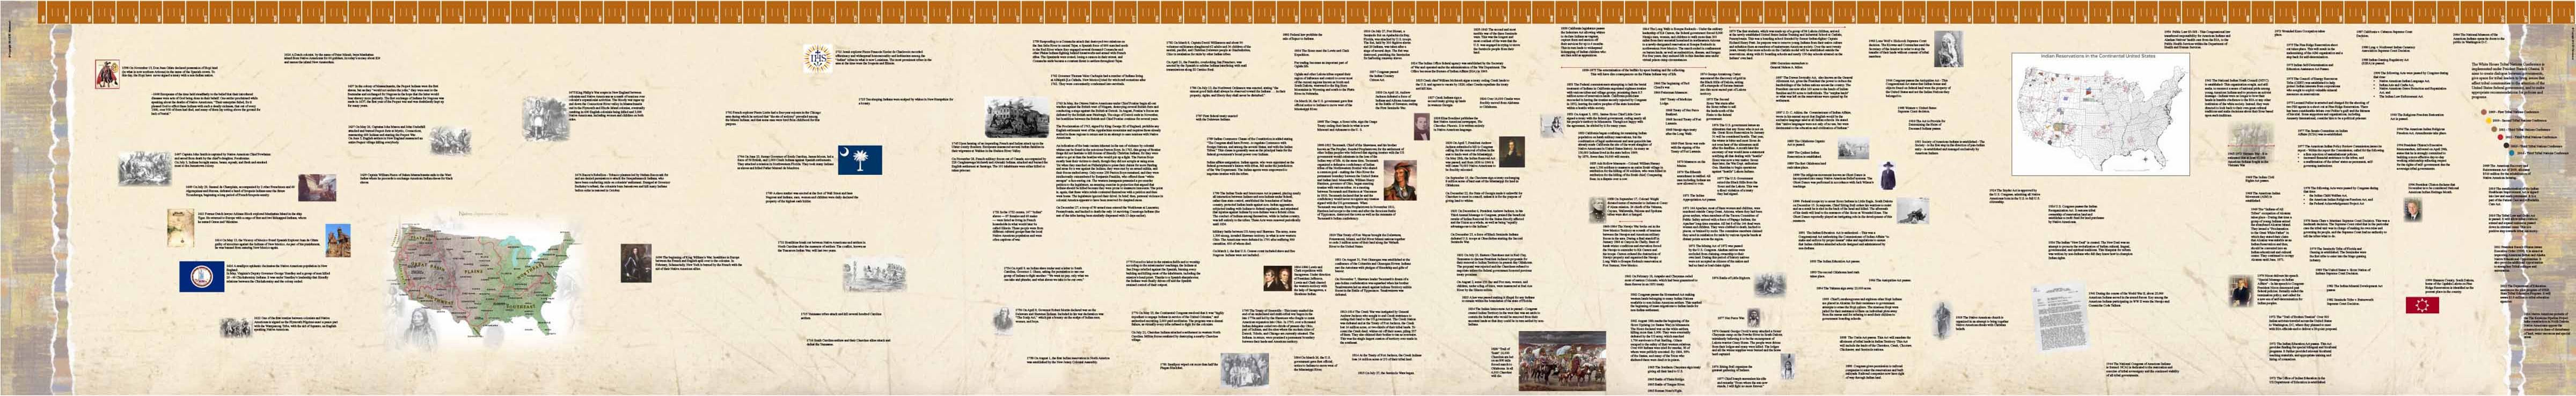 Nienhuis Montessori Timeline Native Indian History (Large Display) - obrázek 1